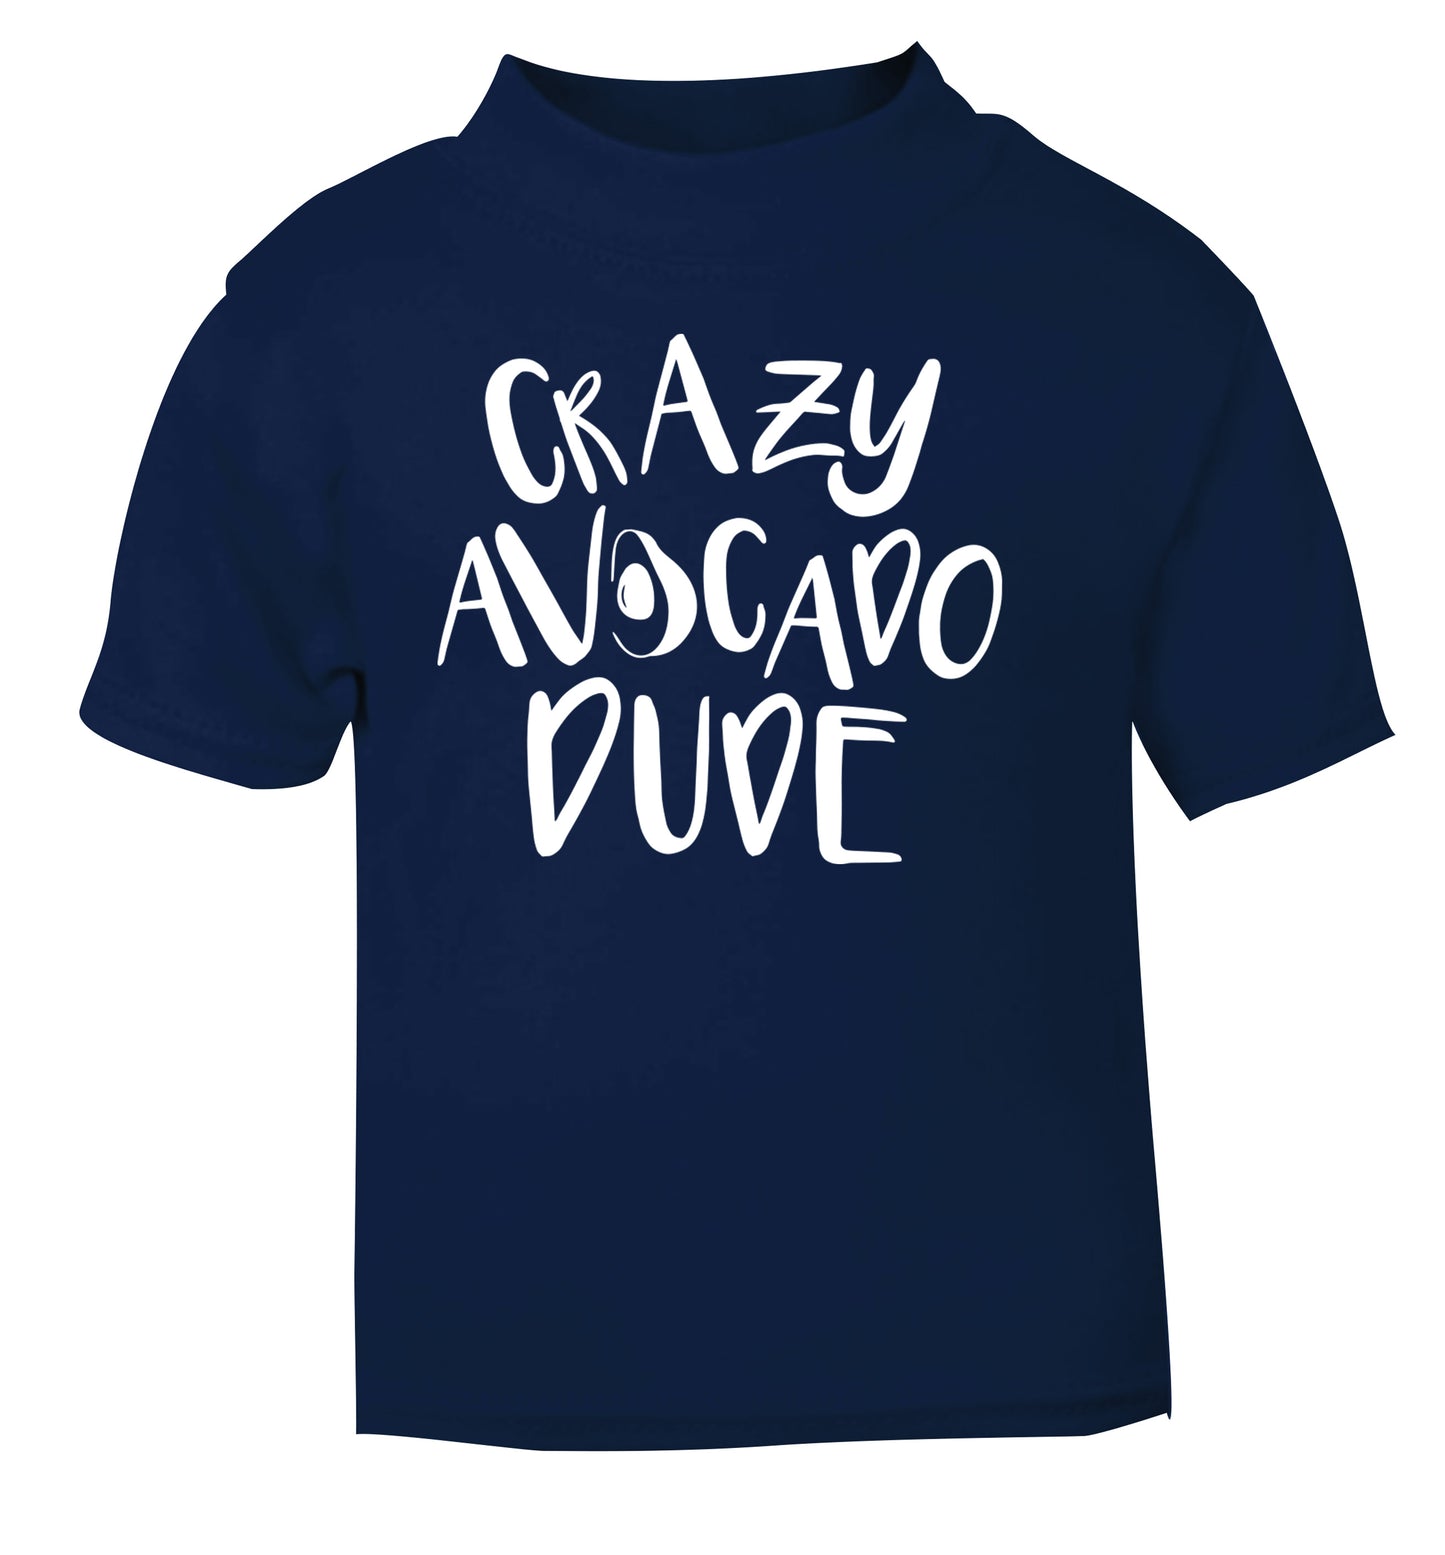 Crazy avocado dude navy Baby Toddler Tshirt 2 Years